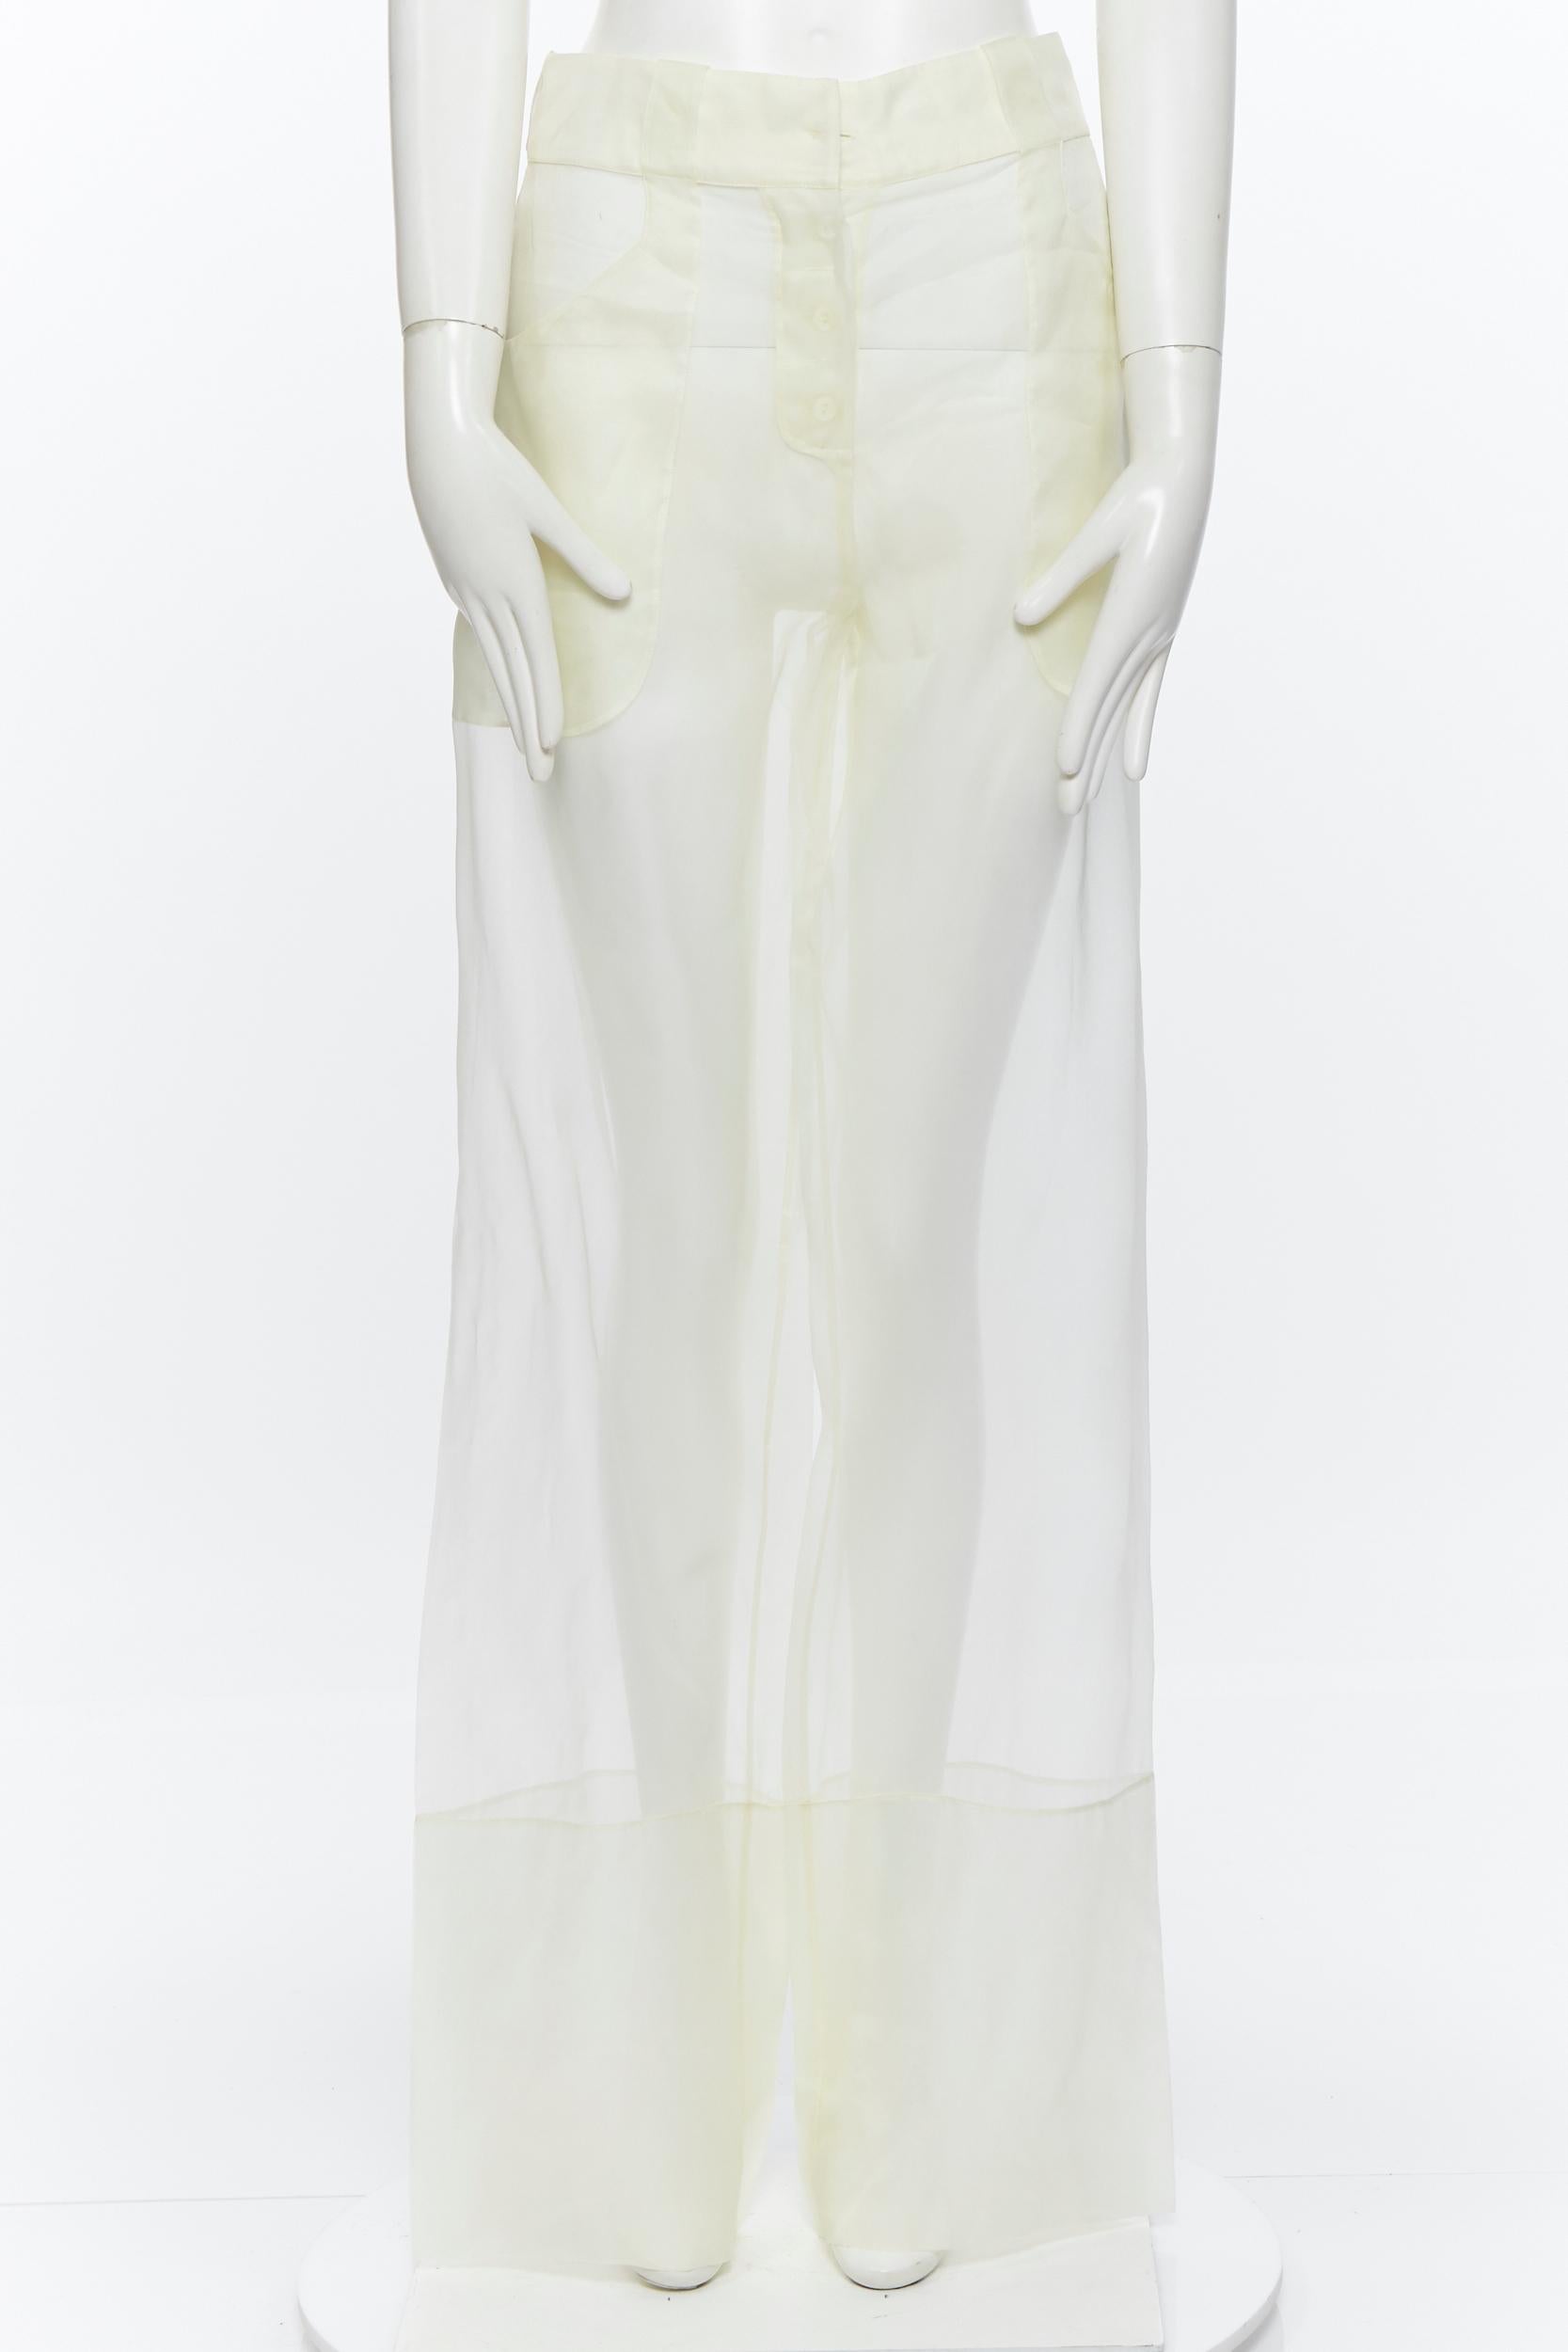 new LA PERLA SS15 Runway silk organza high waisted sheer wide leg pants IT42 M
Brand: La Perla
Collection: Spring Summer 2015
As seen on: Kim Kardashian in Las Vegas
Model Name / Style: Sheer pants
Material: Silk
Color: Beige
Pattern: Solid
Closure: